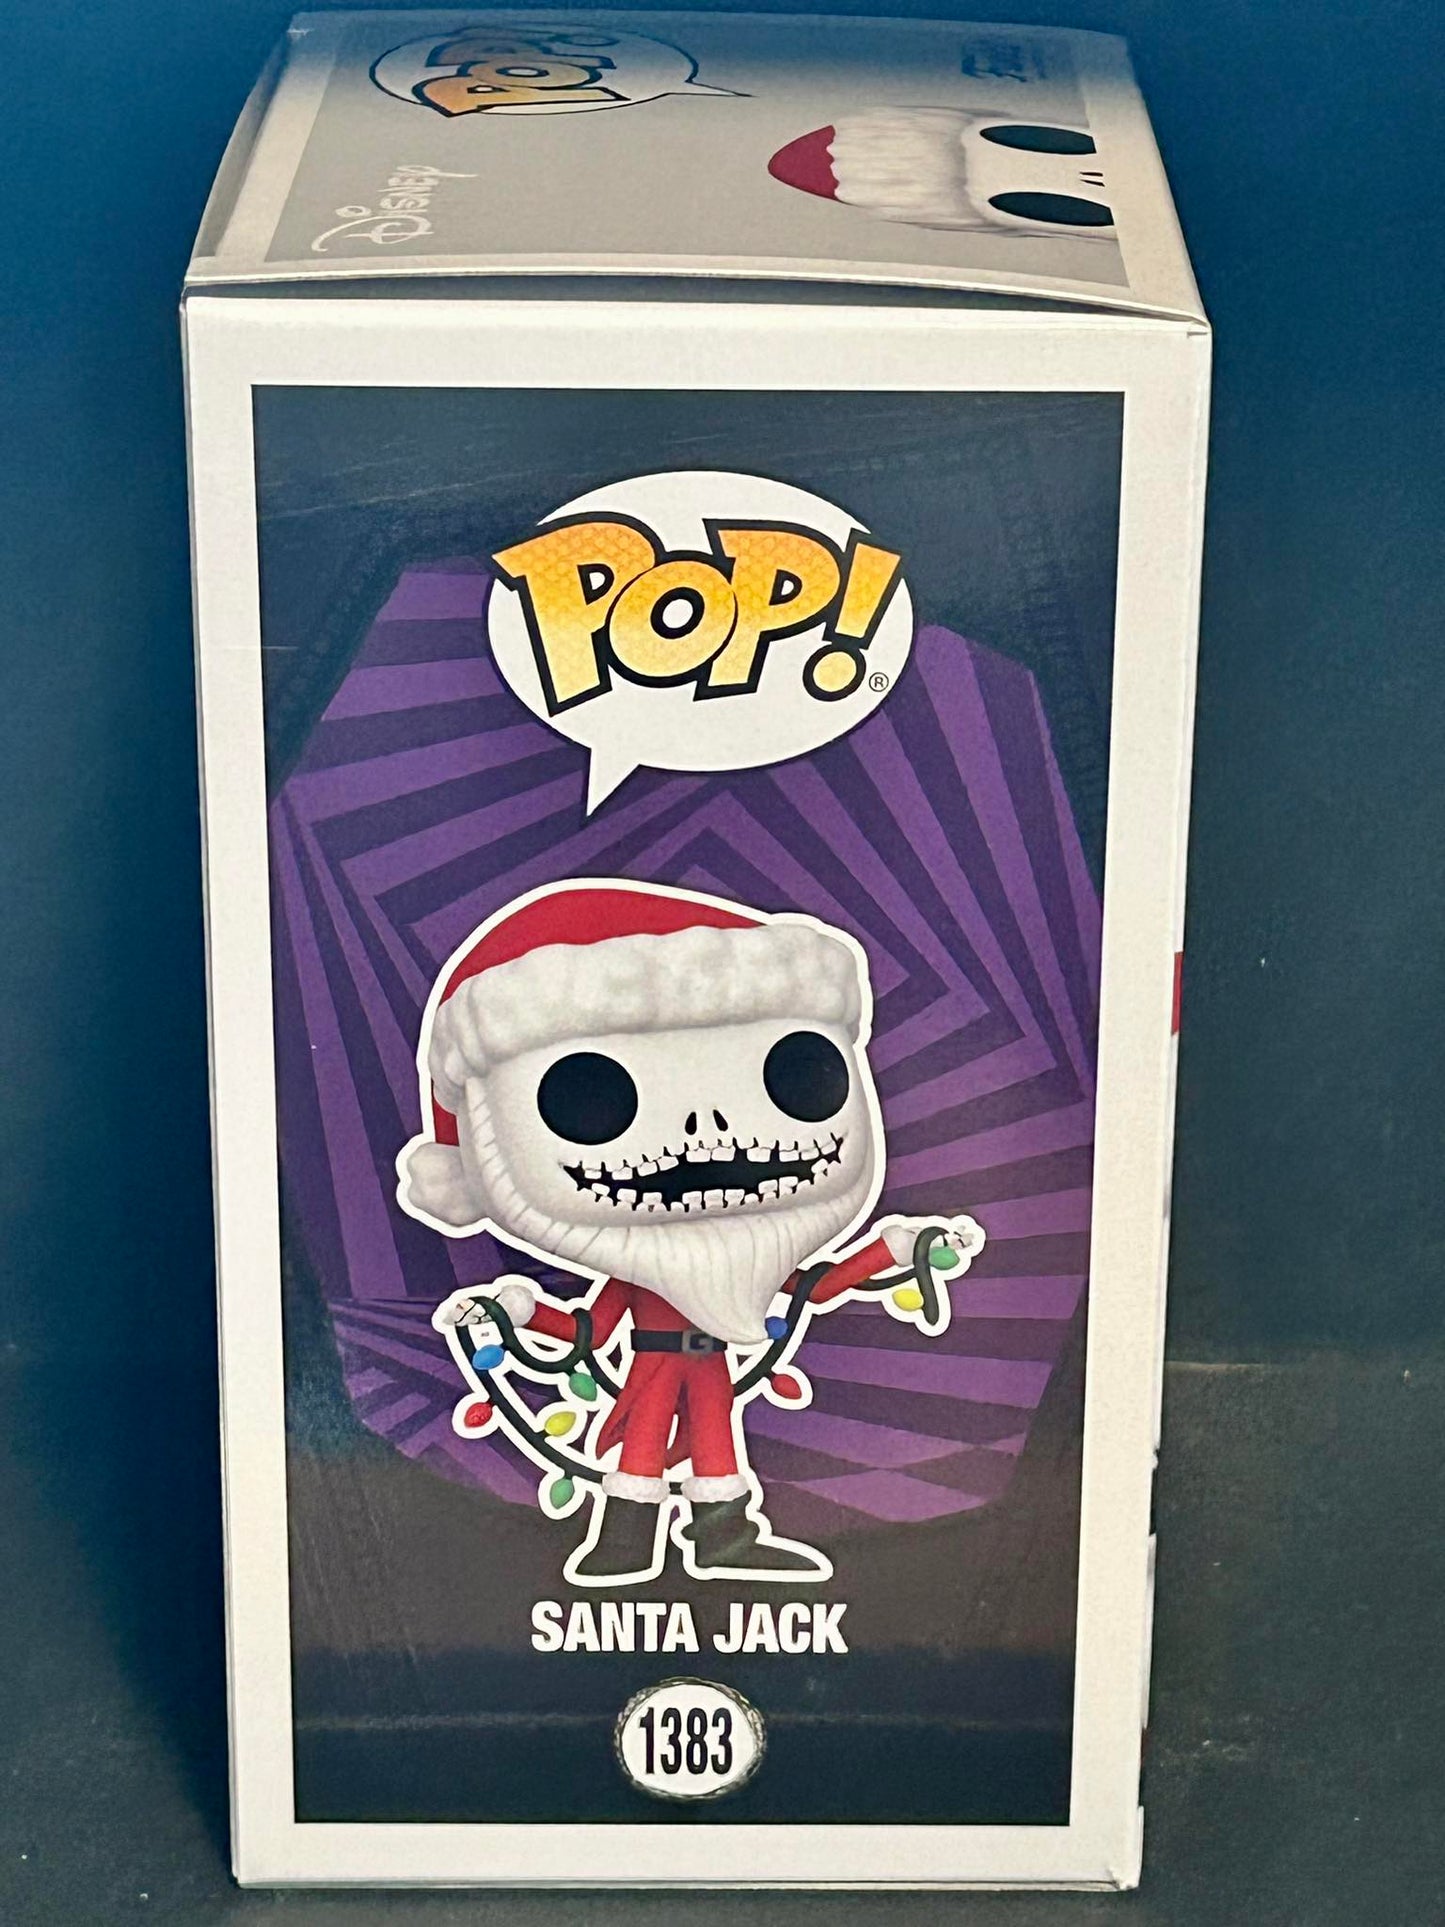 Funko Pop! Disney: The Nightmare Before Christmas 30th Anniversary - Santa Jack